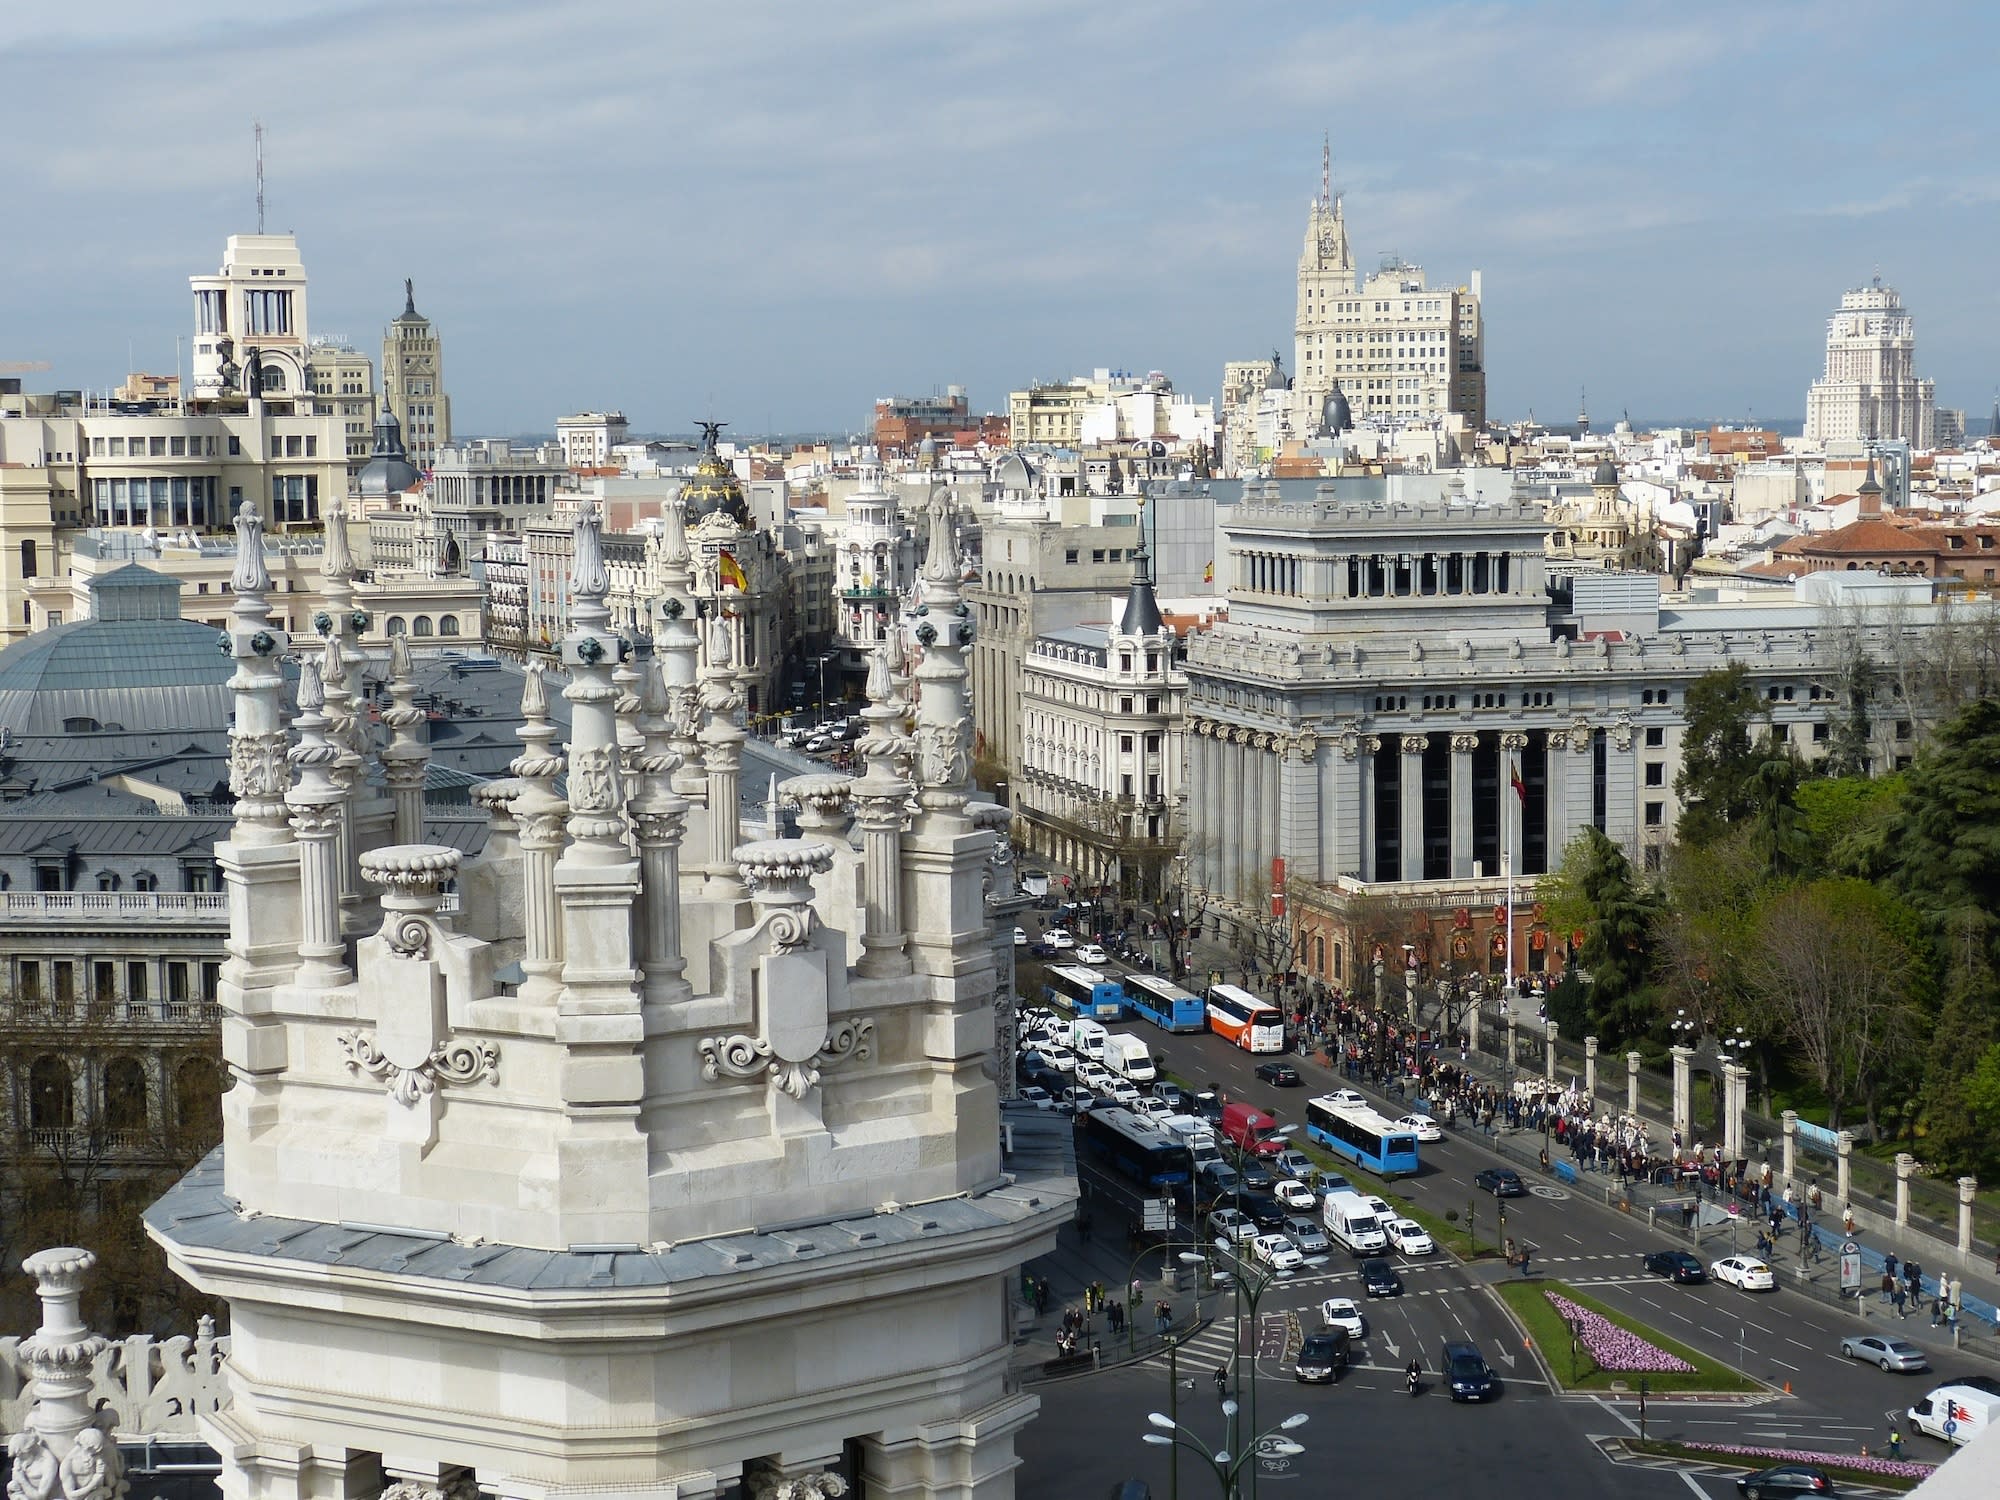 architecture of Madrid